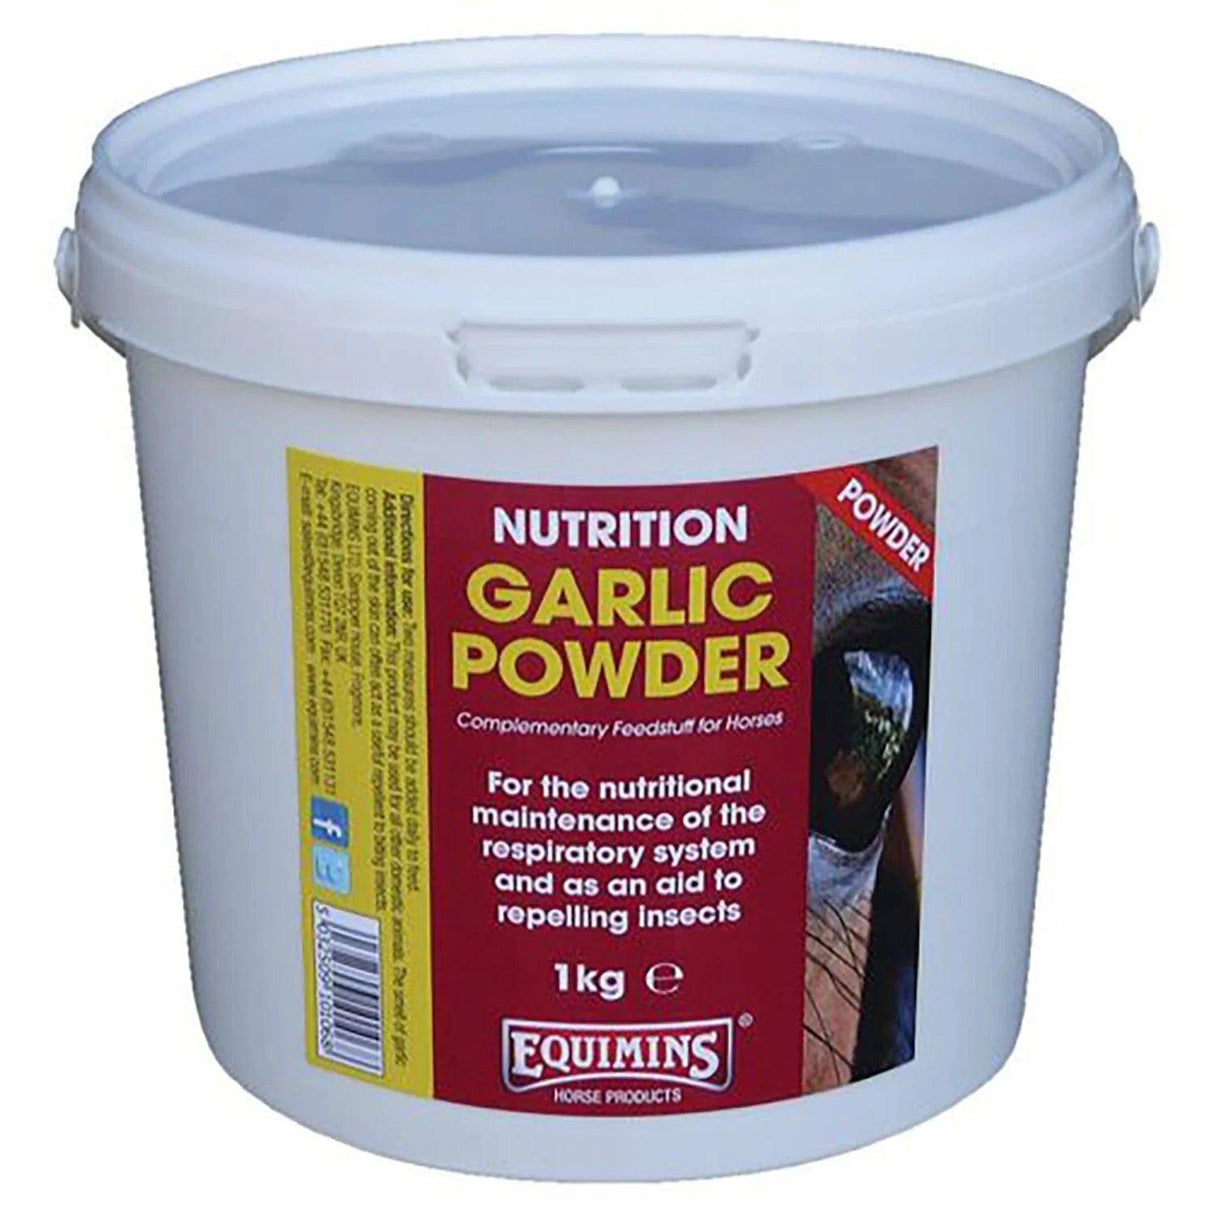 Equimins Garlic Powder Horse Supplements 3Kg Barnstaple Equestrian Supplies